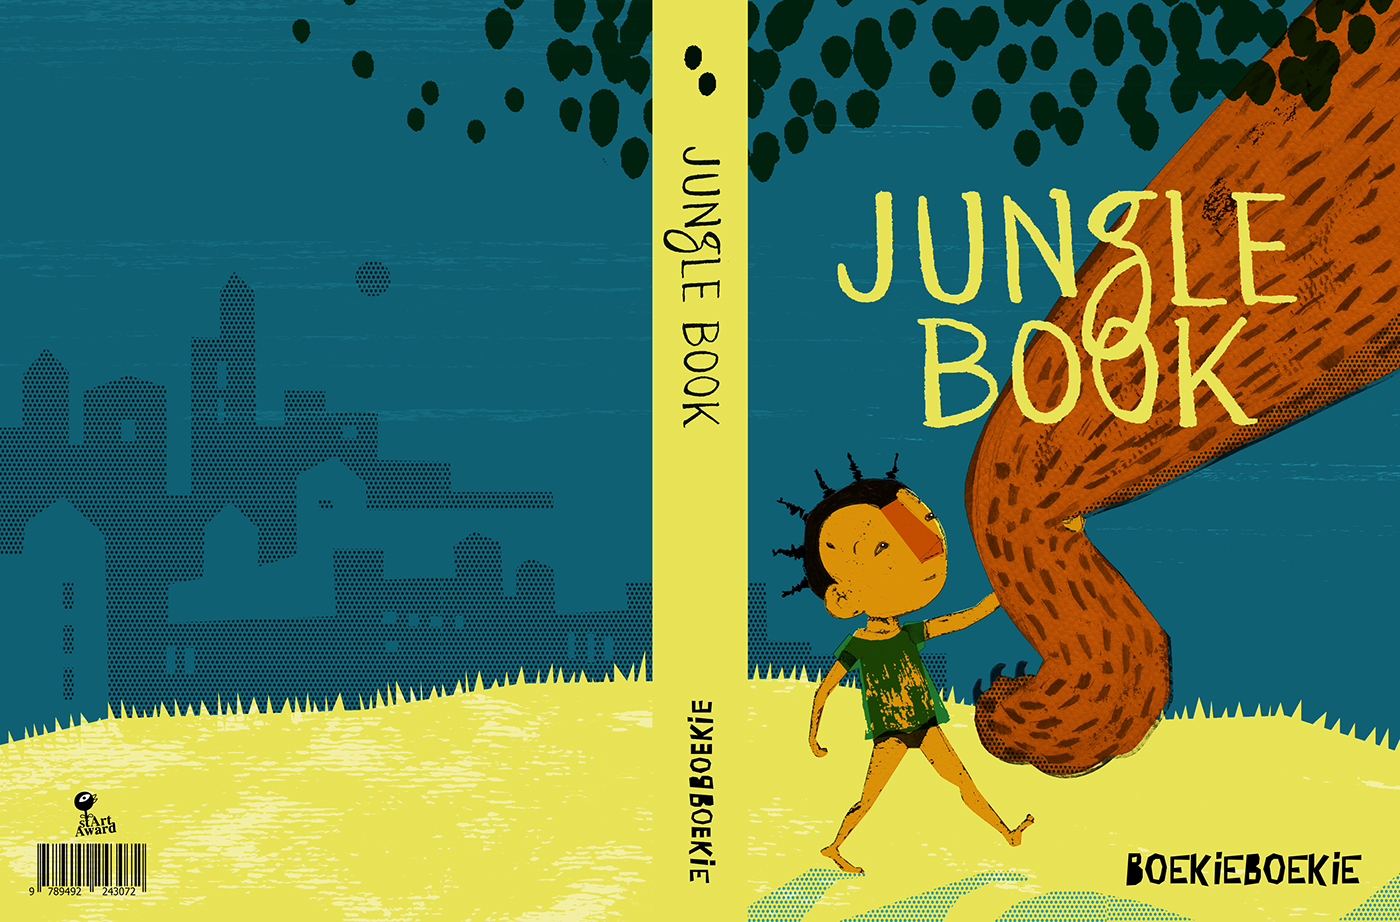 Start Award boekieboekie junglebook children´s book ILLUSTRATION 